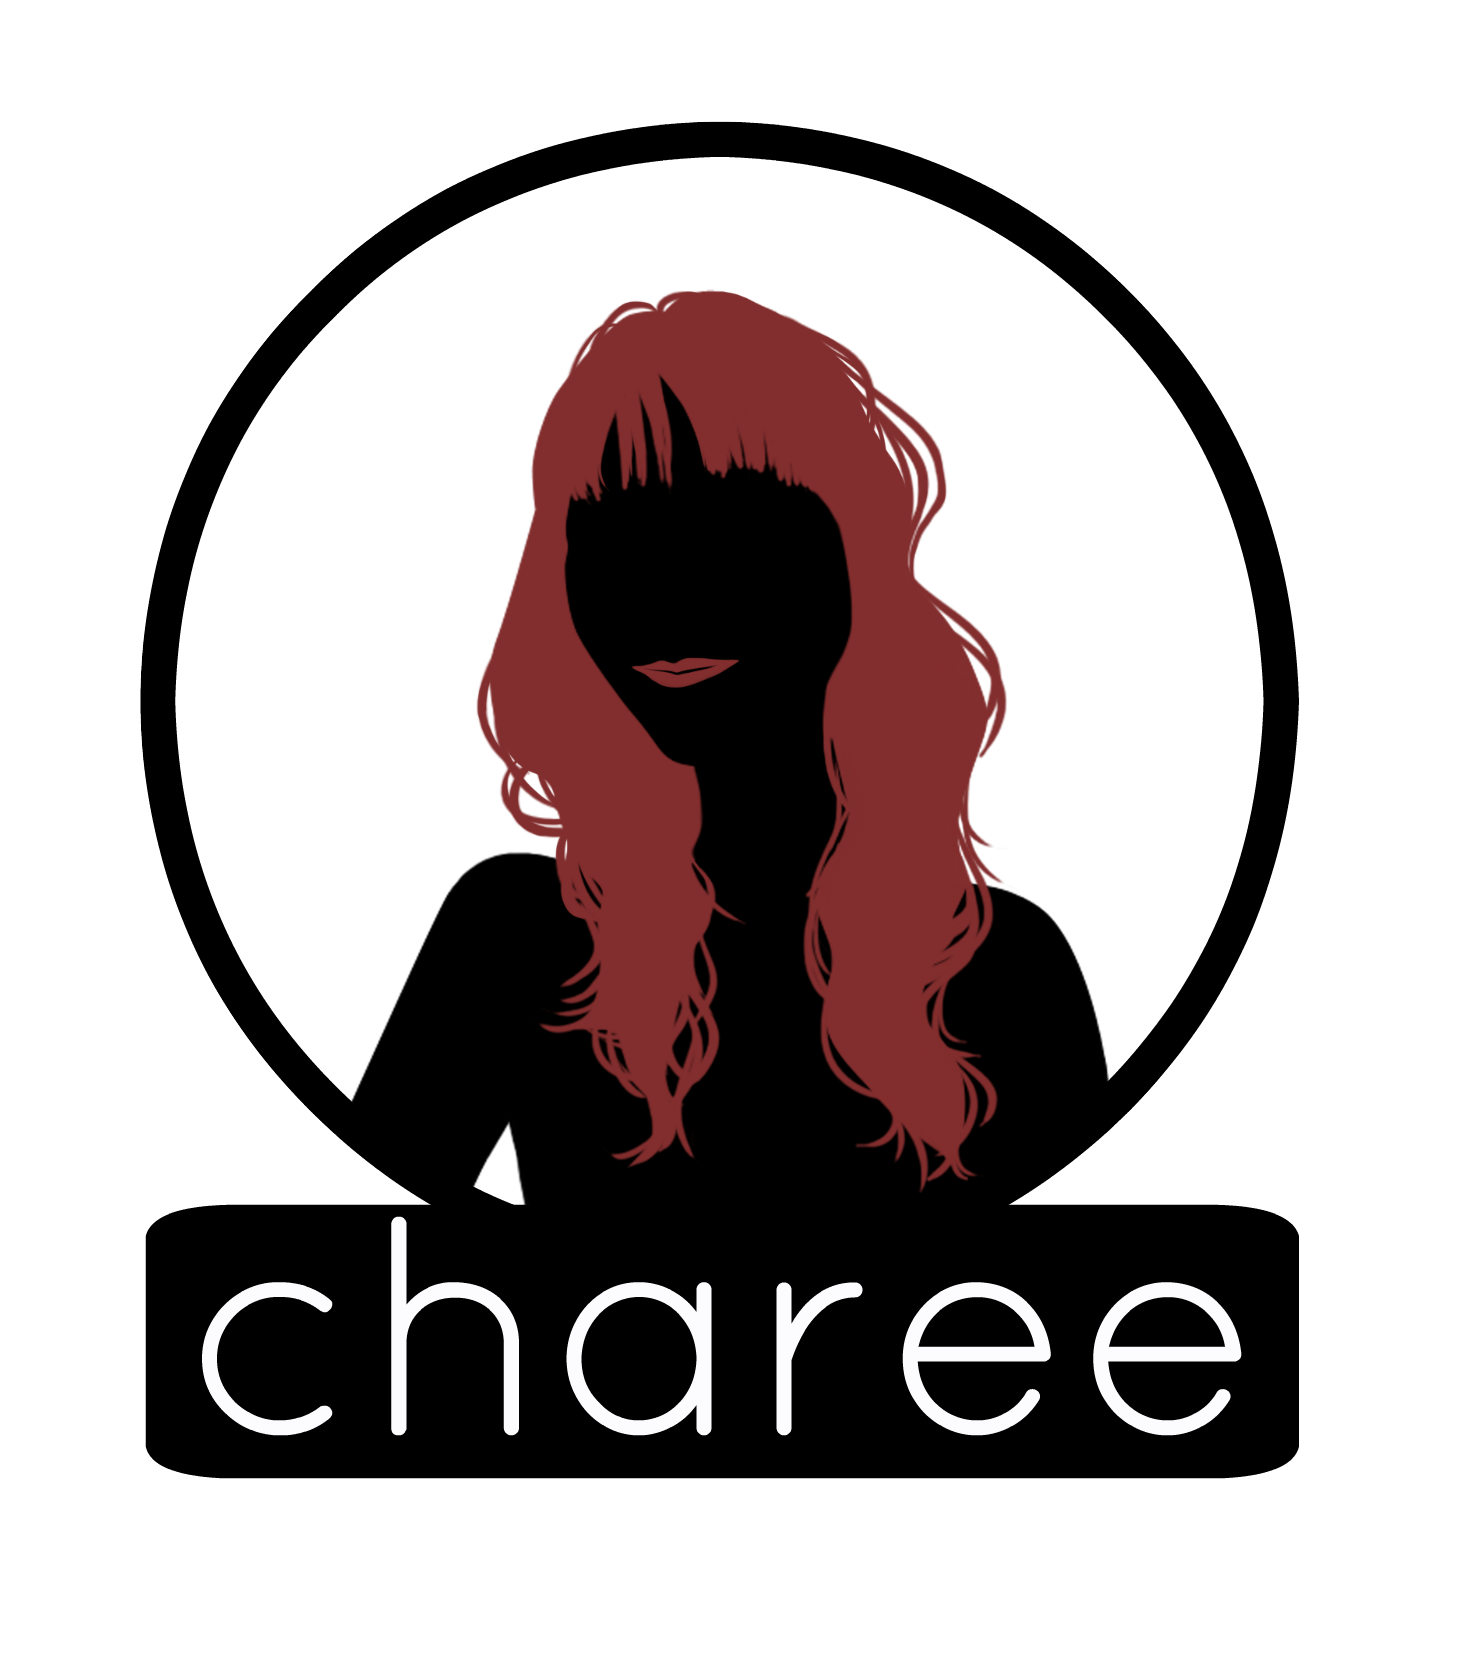 Charee Circle BG Label 2